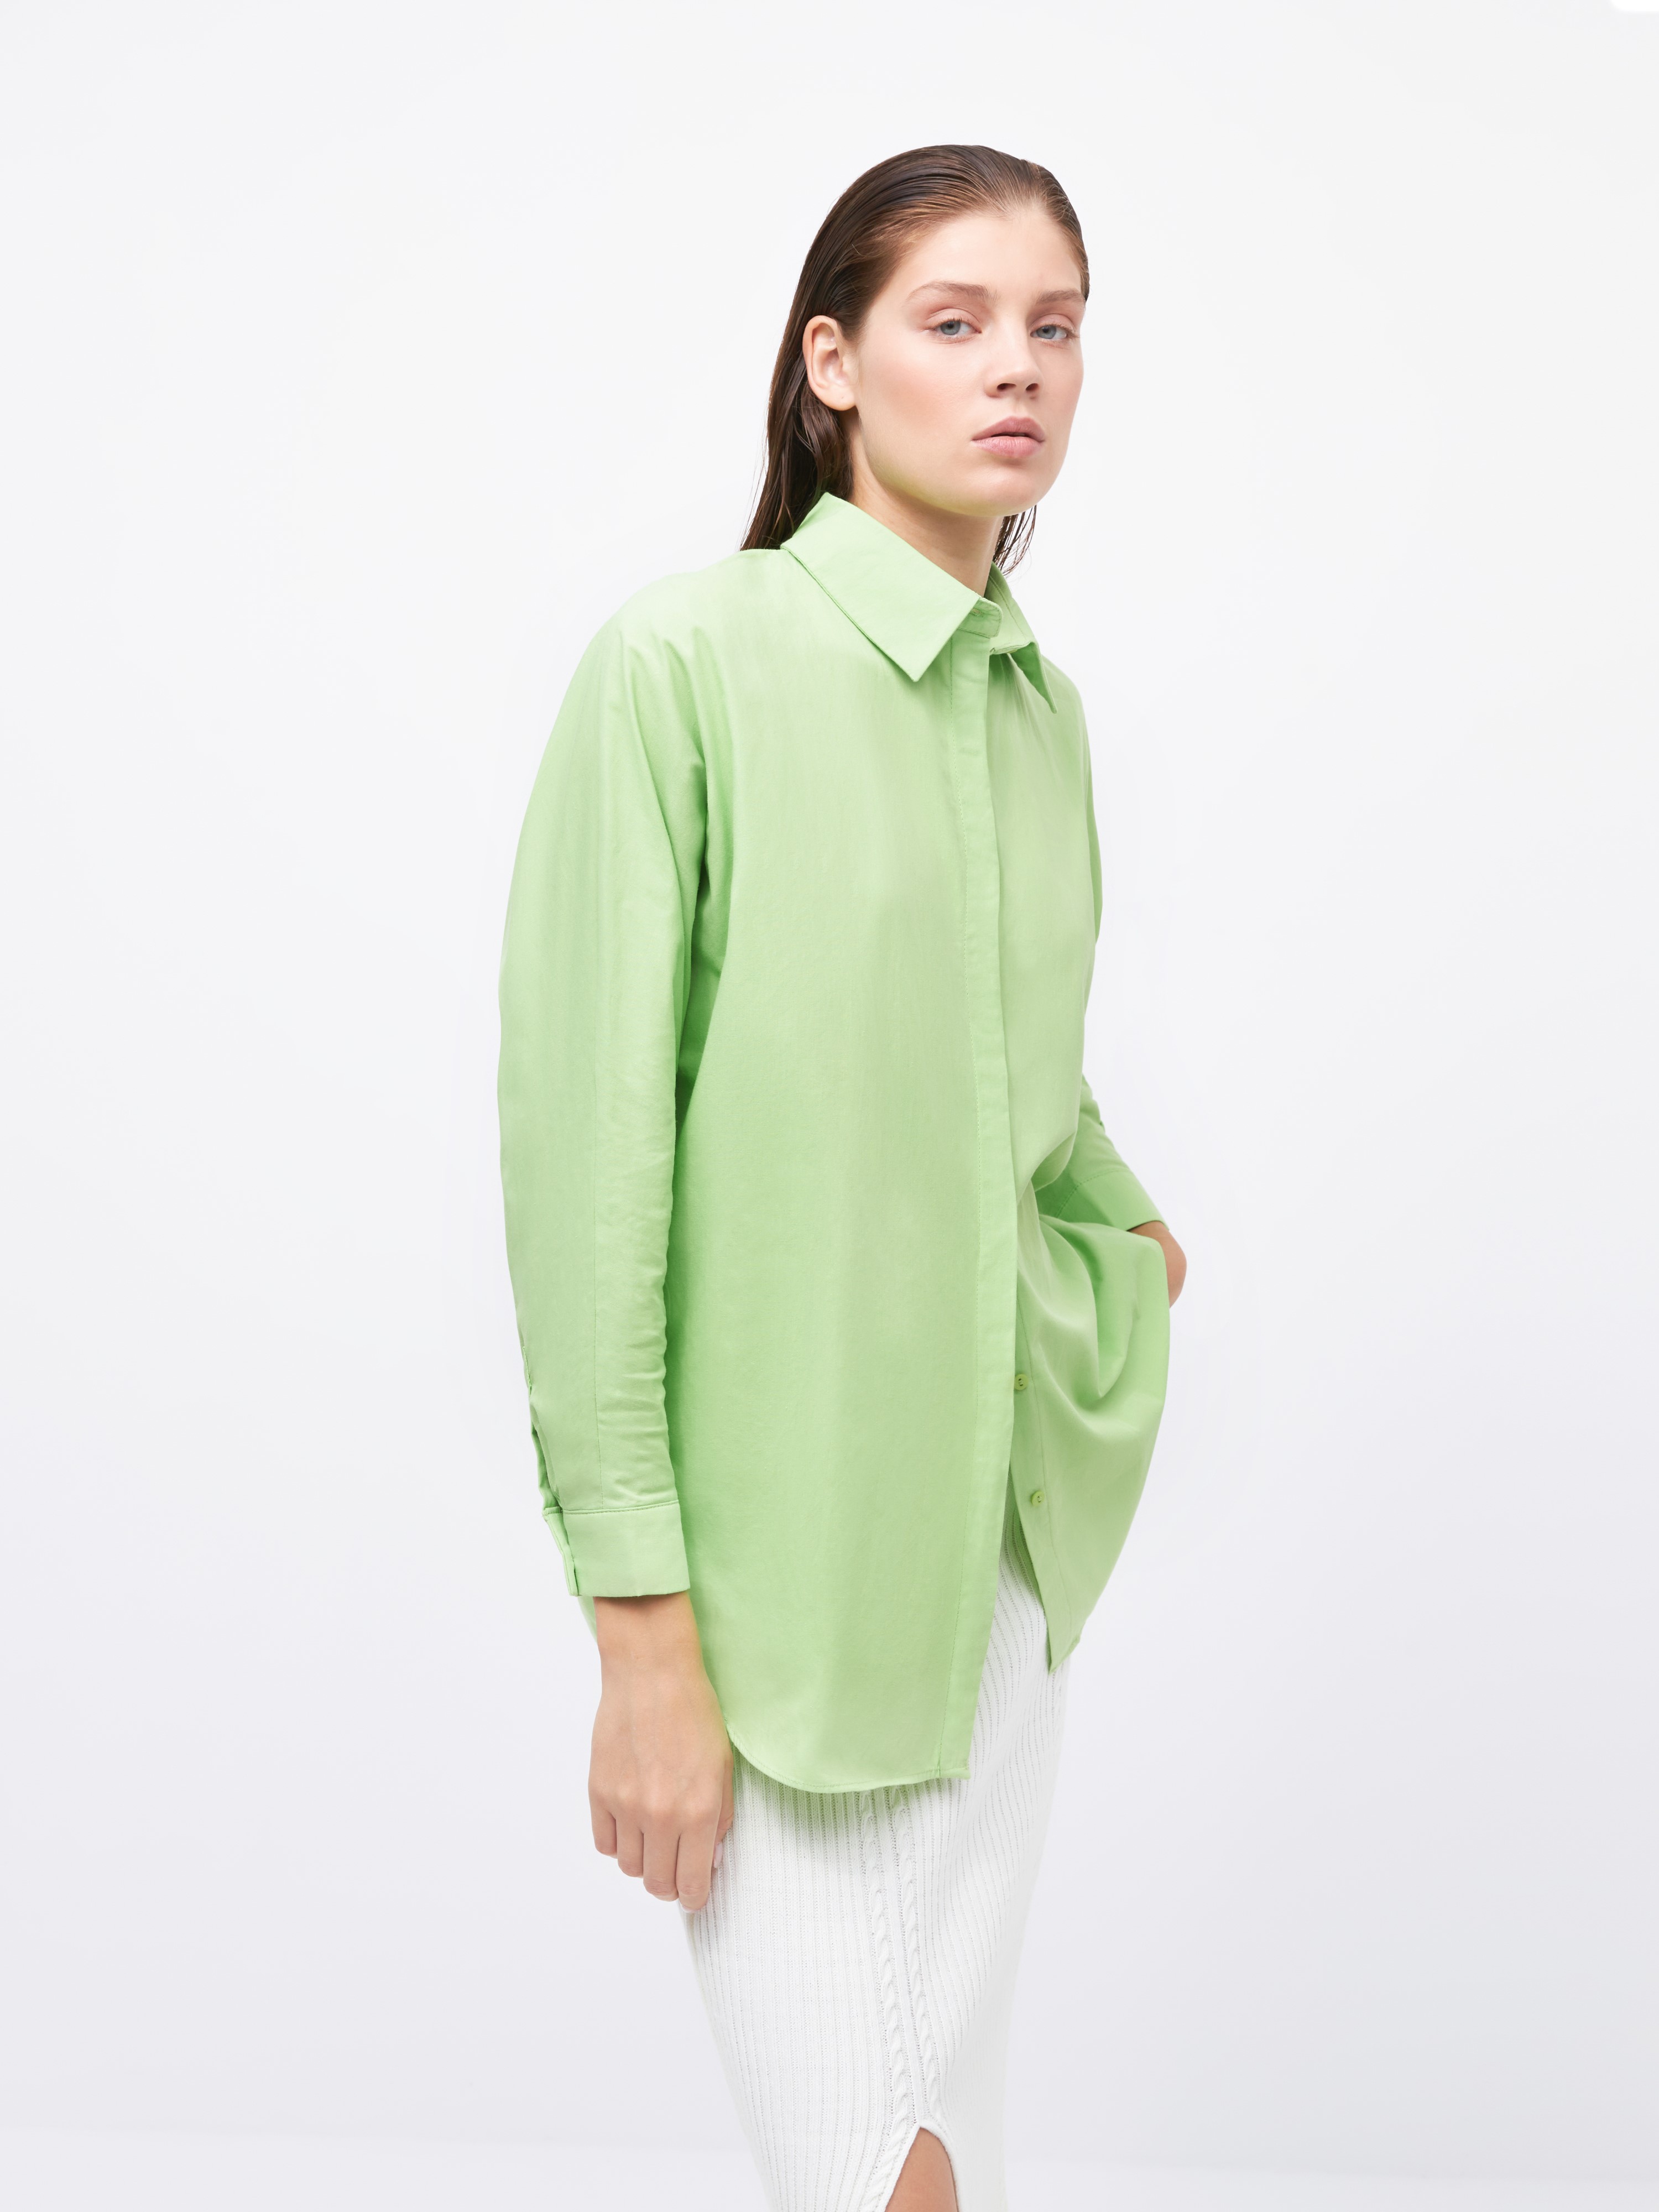 Рубашка женская Arive ARV-WS-10521-007 светло-зелёная, размер L